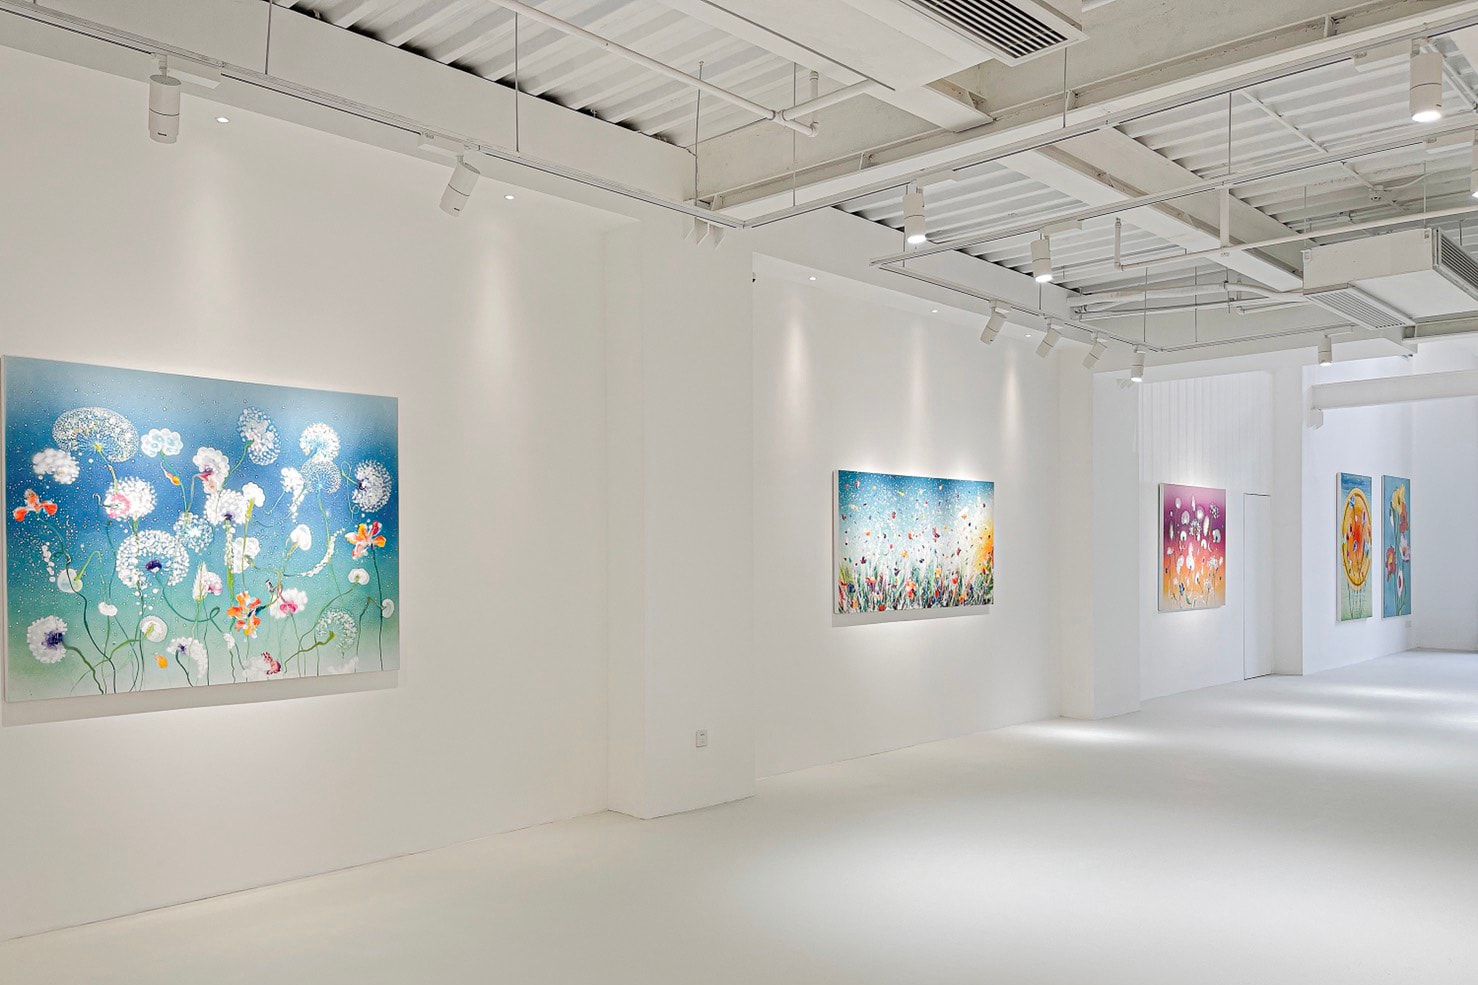 Bluerider ART 蓝骑士上海艺术空间带来 Thierry Feuz 个展「Neo-Baroque」